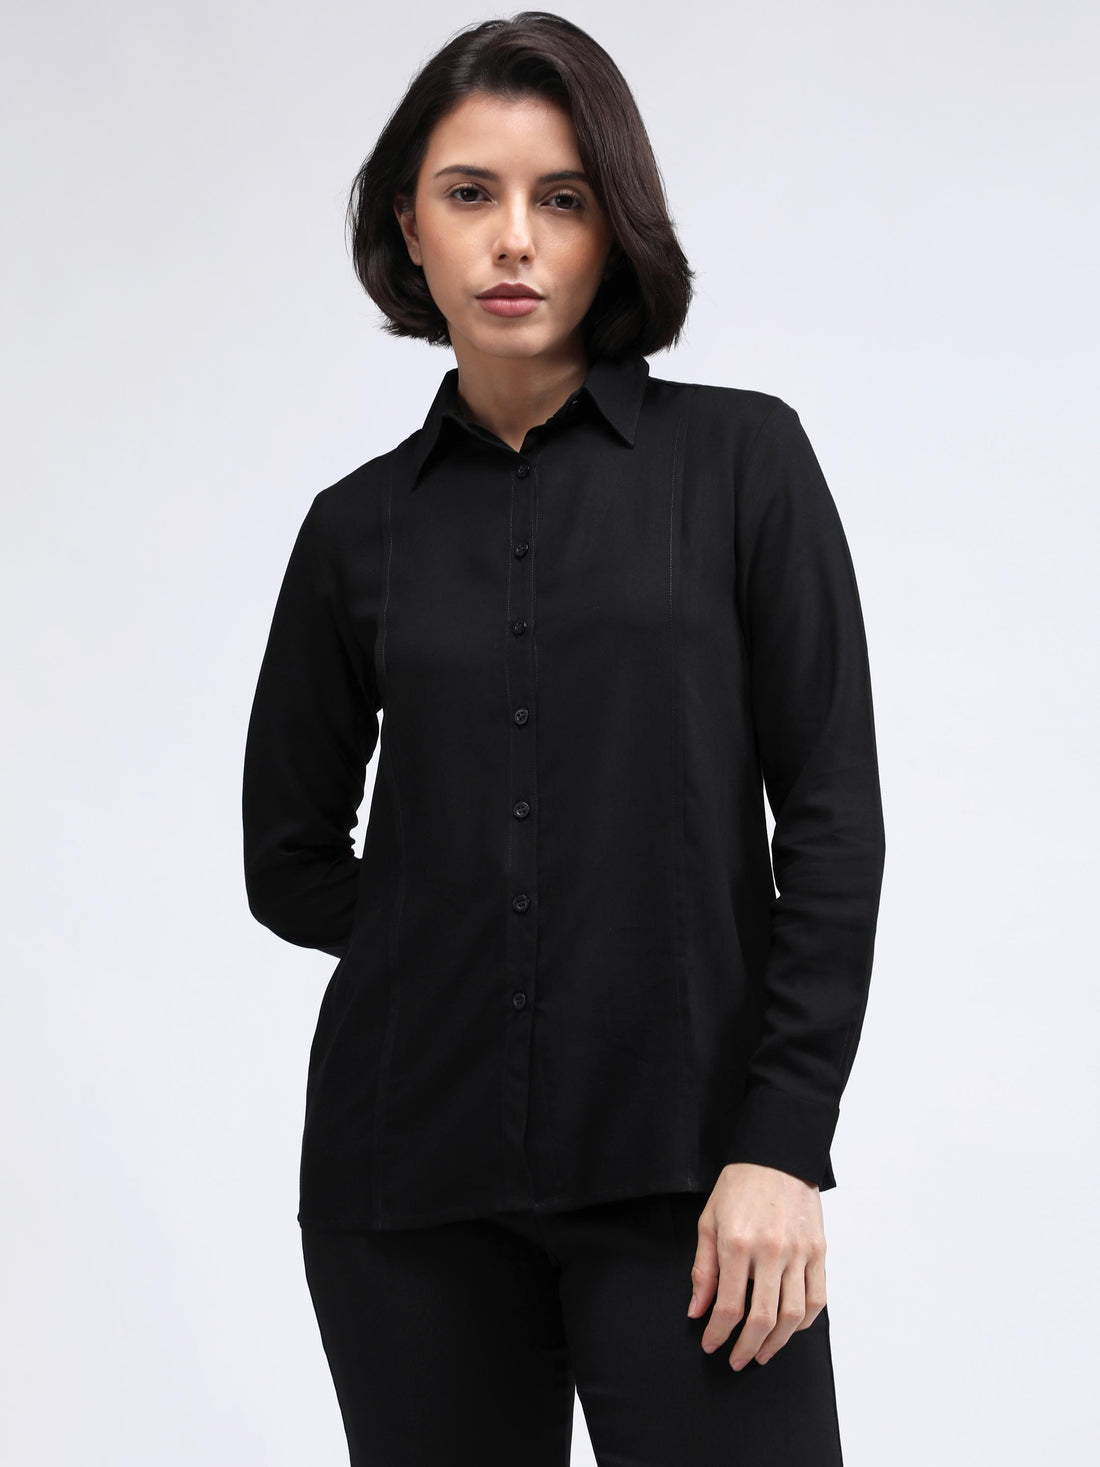 Black formal shirt